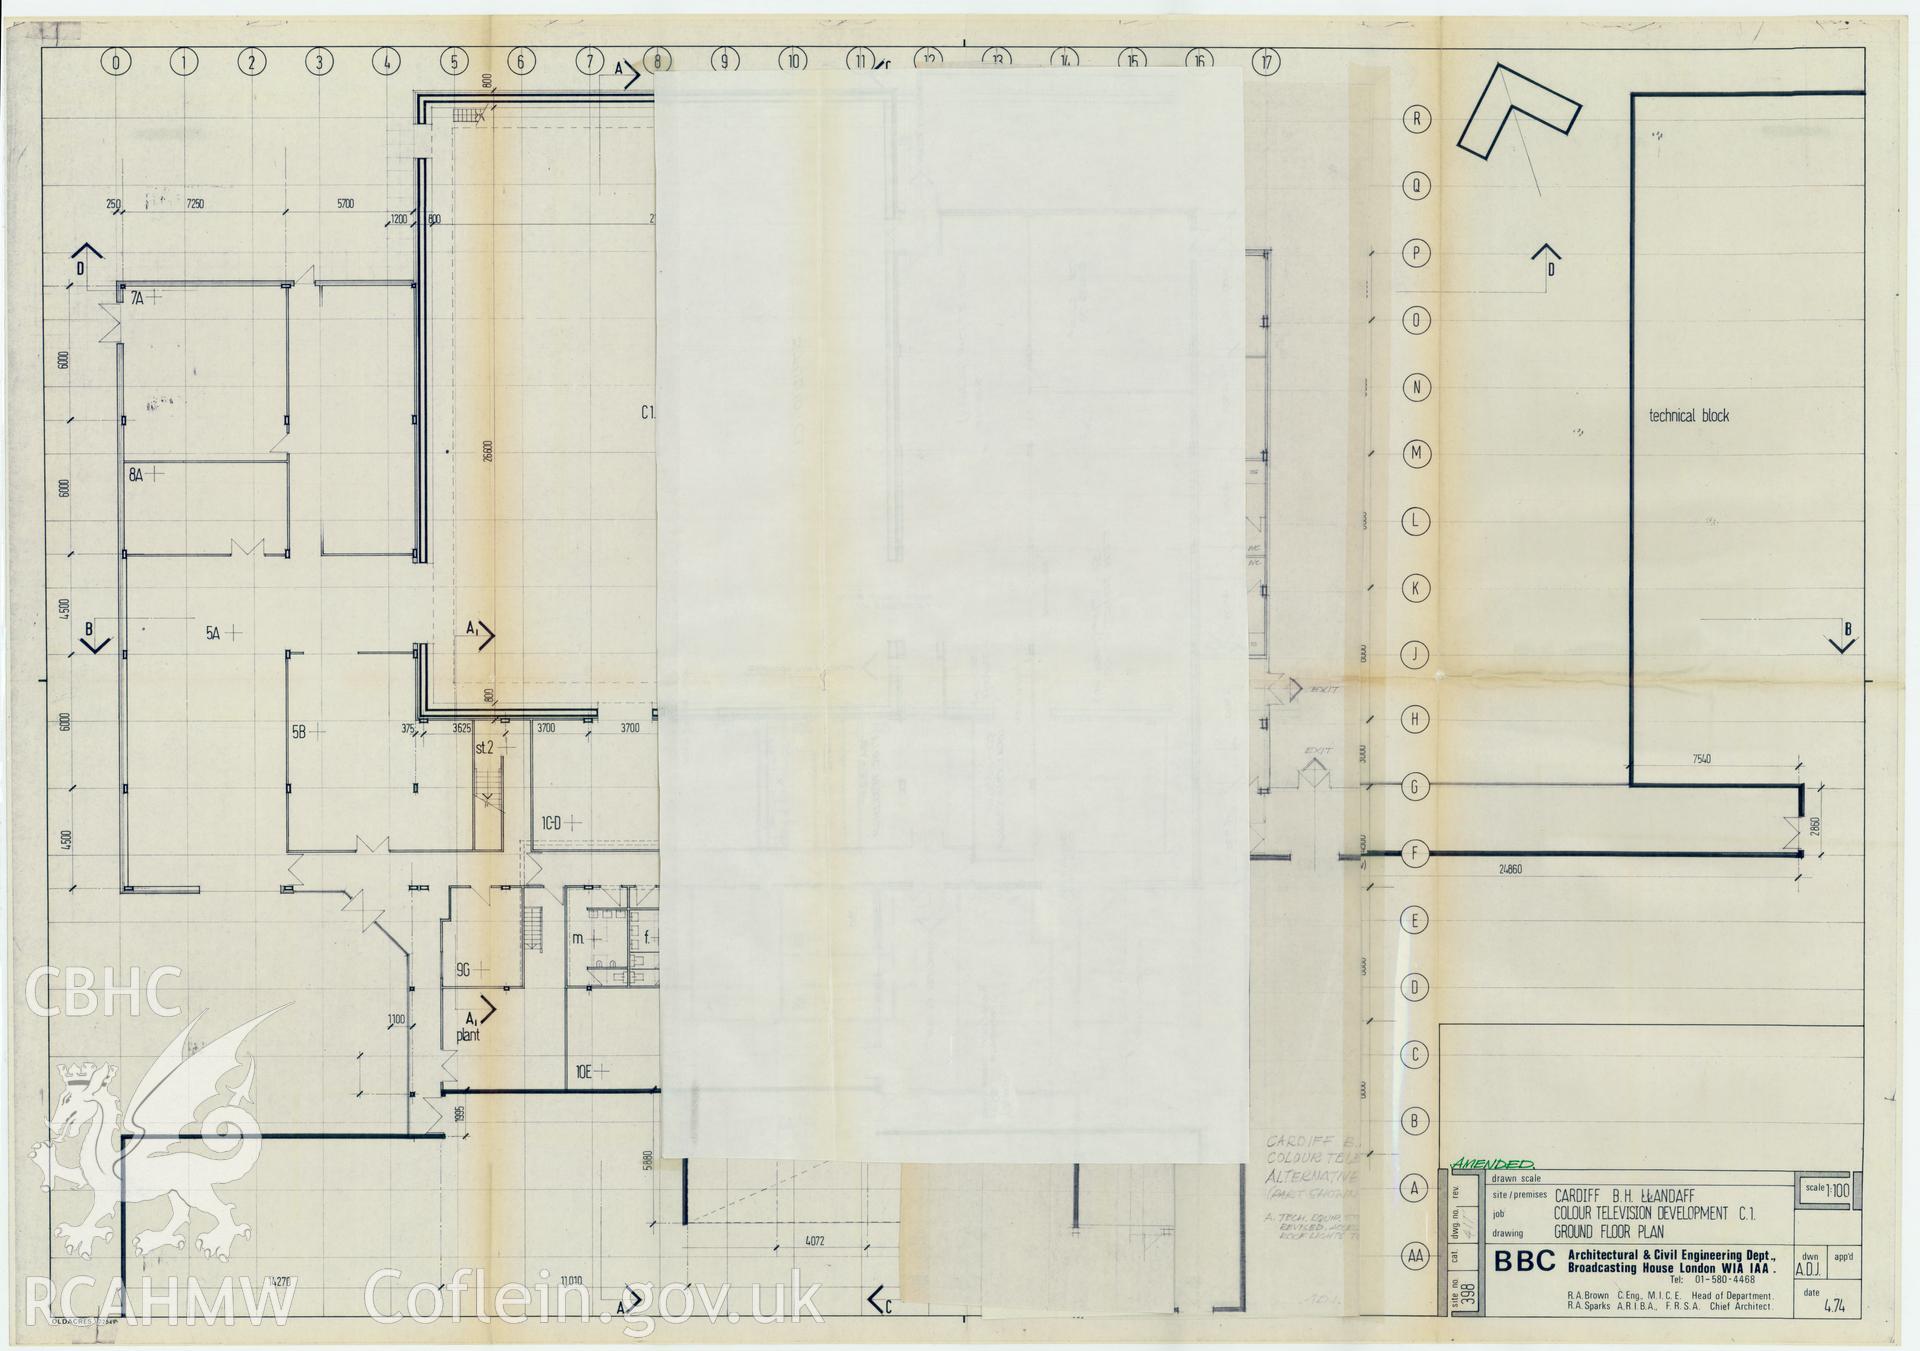 Digitised drawing plan of Llandaff production studio C1 - Colour TV Development, alternative 2 ground floor plan. Drawing no. 411c amended. May 1974.